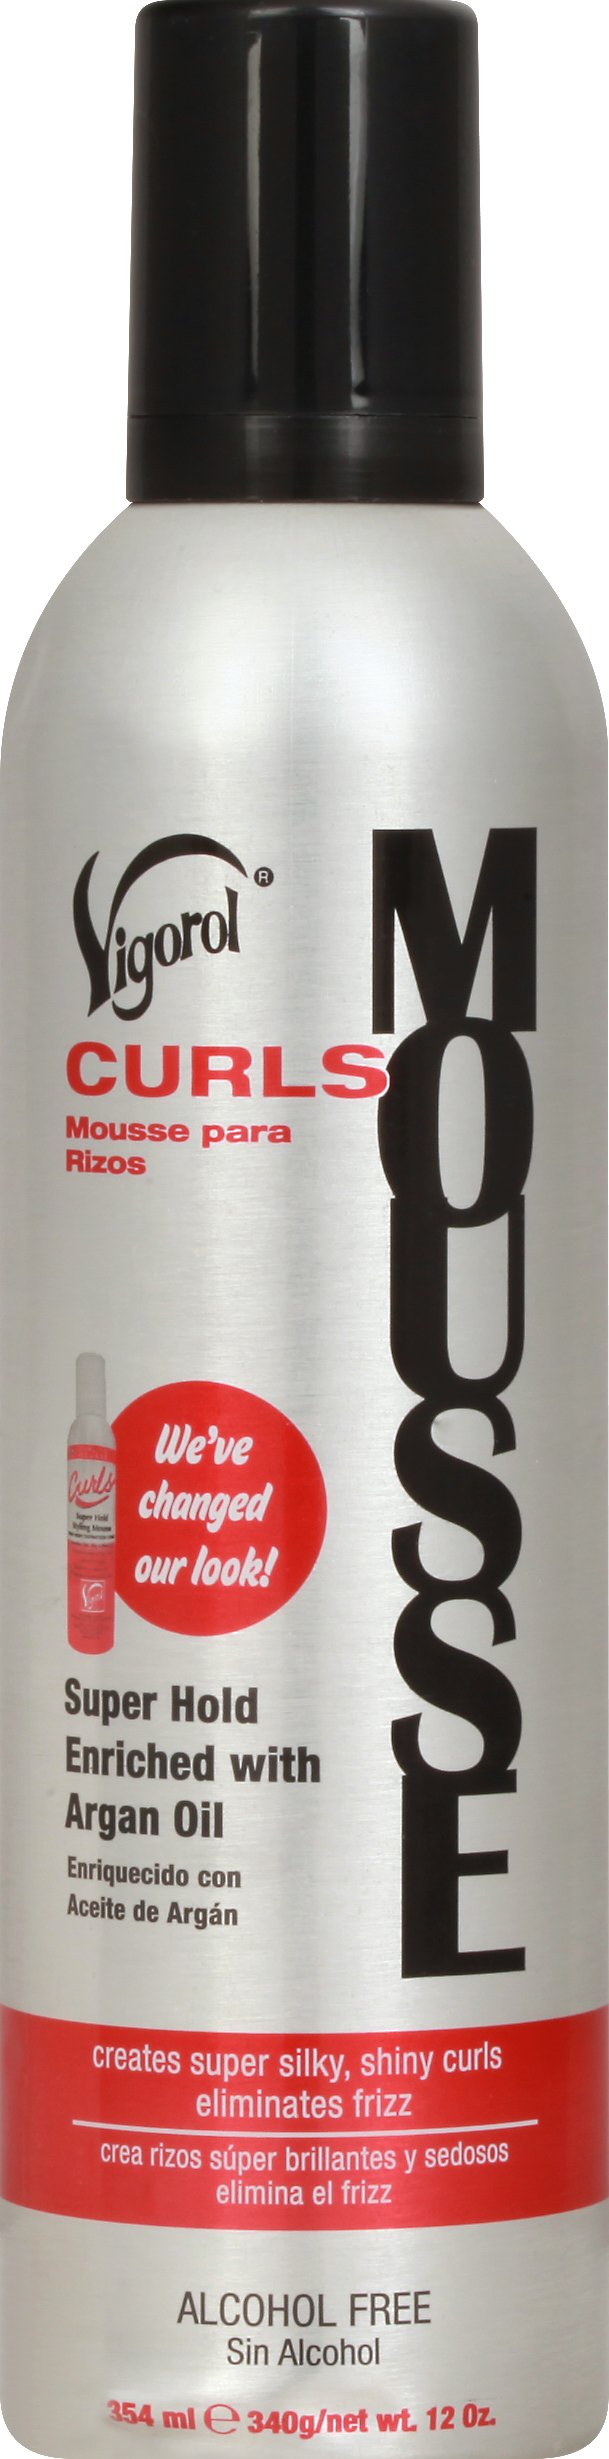 Vigorol Mousse